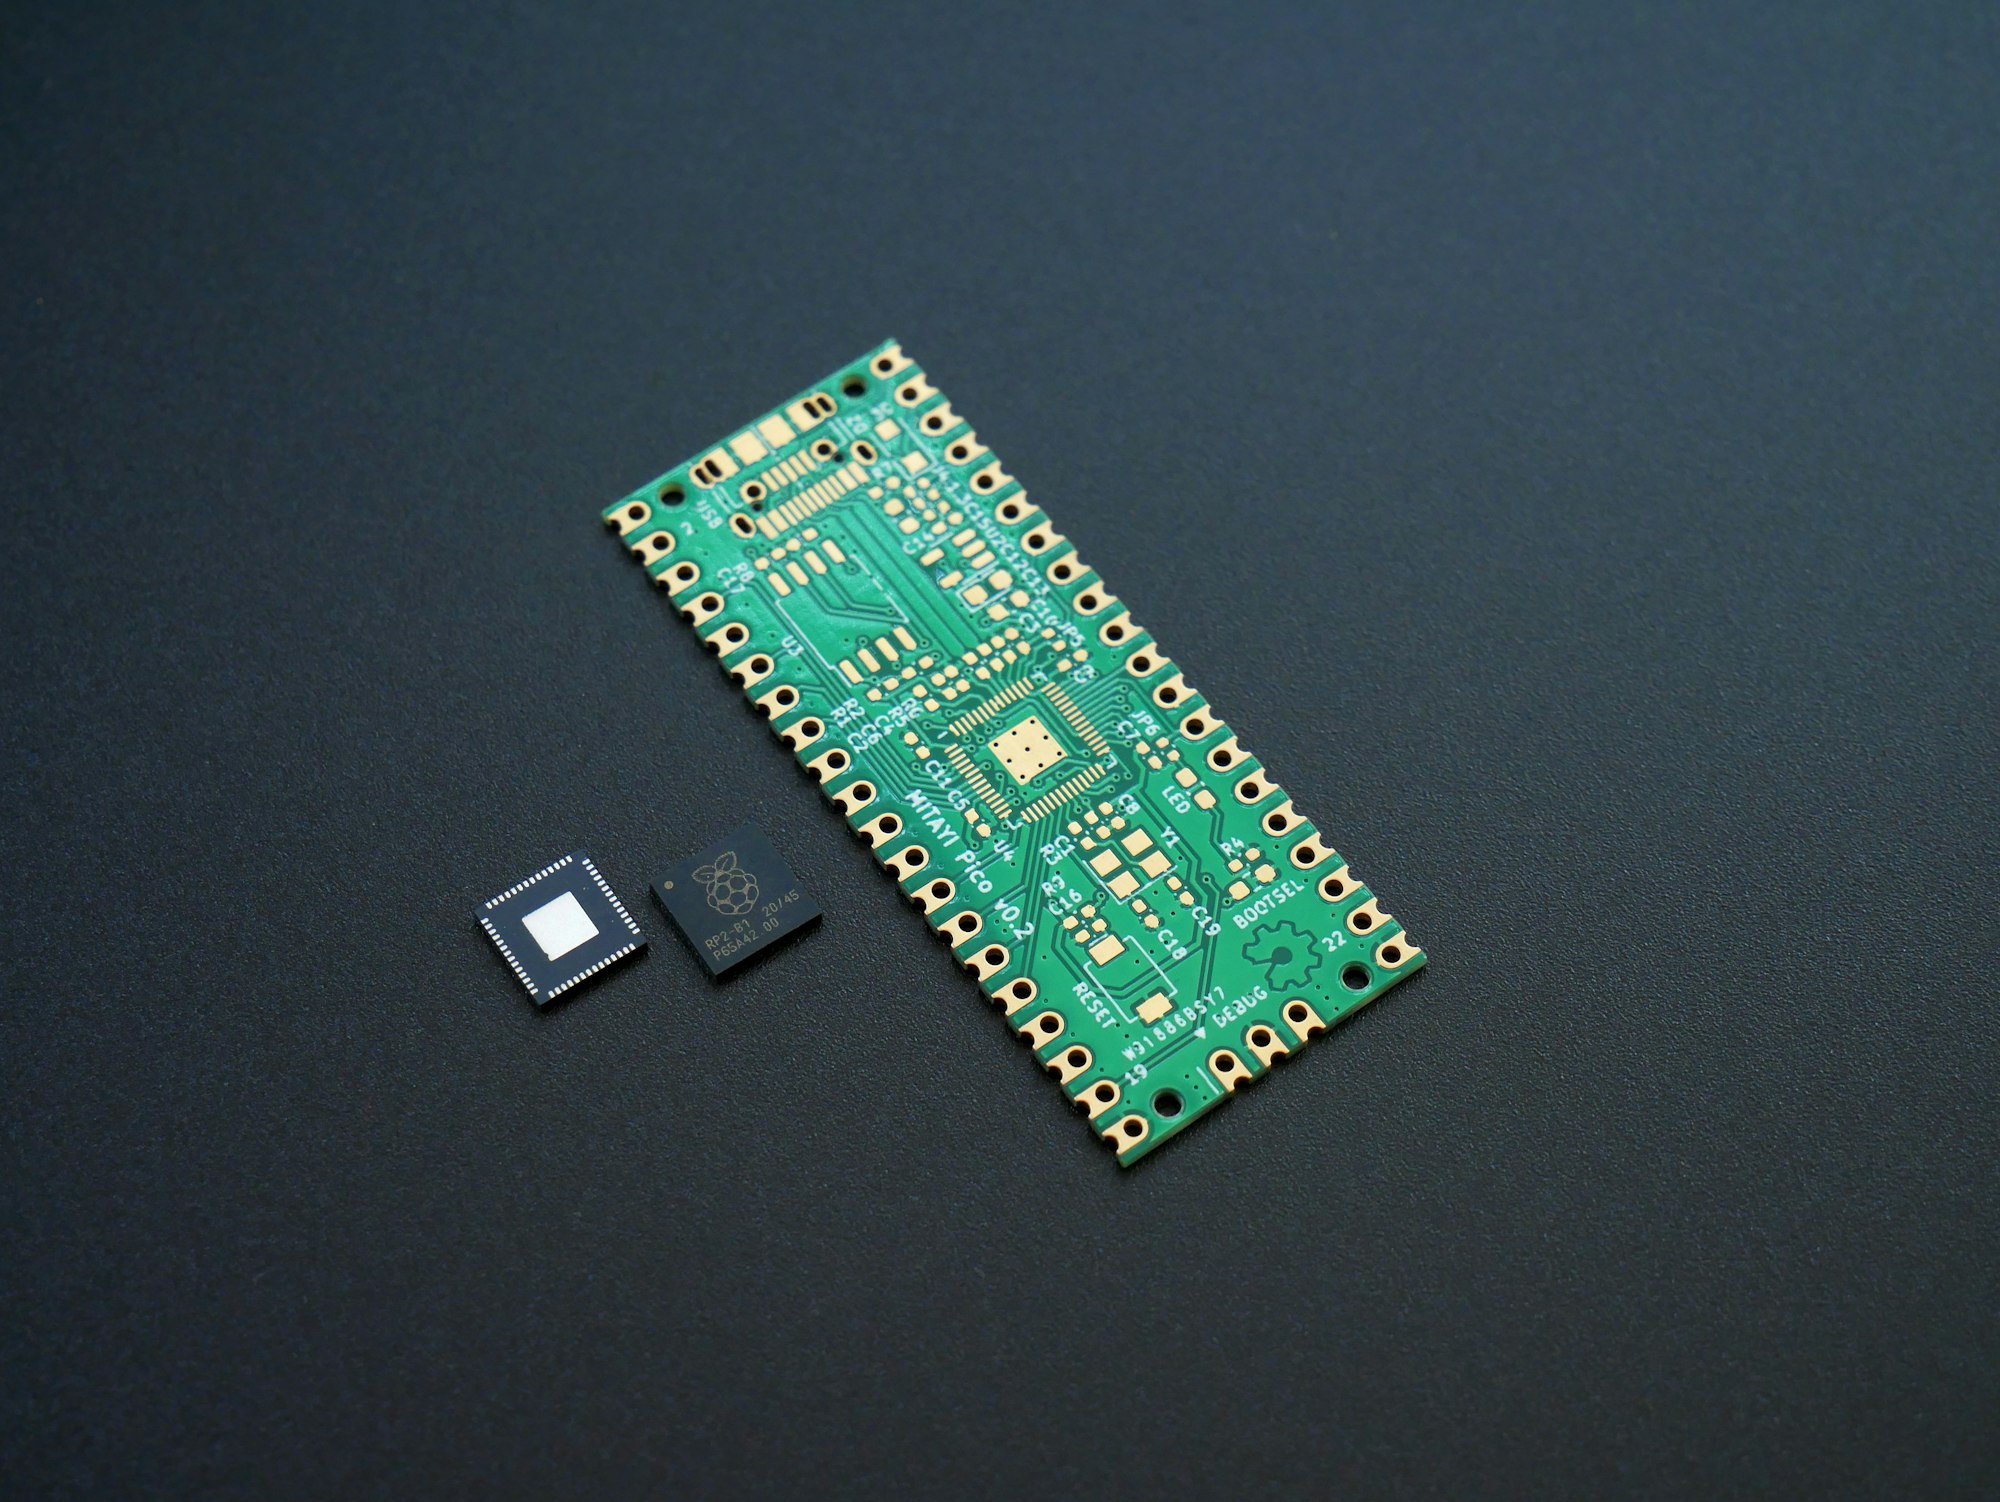 A plain Mitayi Pico RP2040 PCB near to two RP2040 microcontrollers.